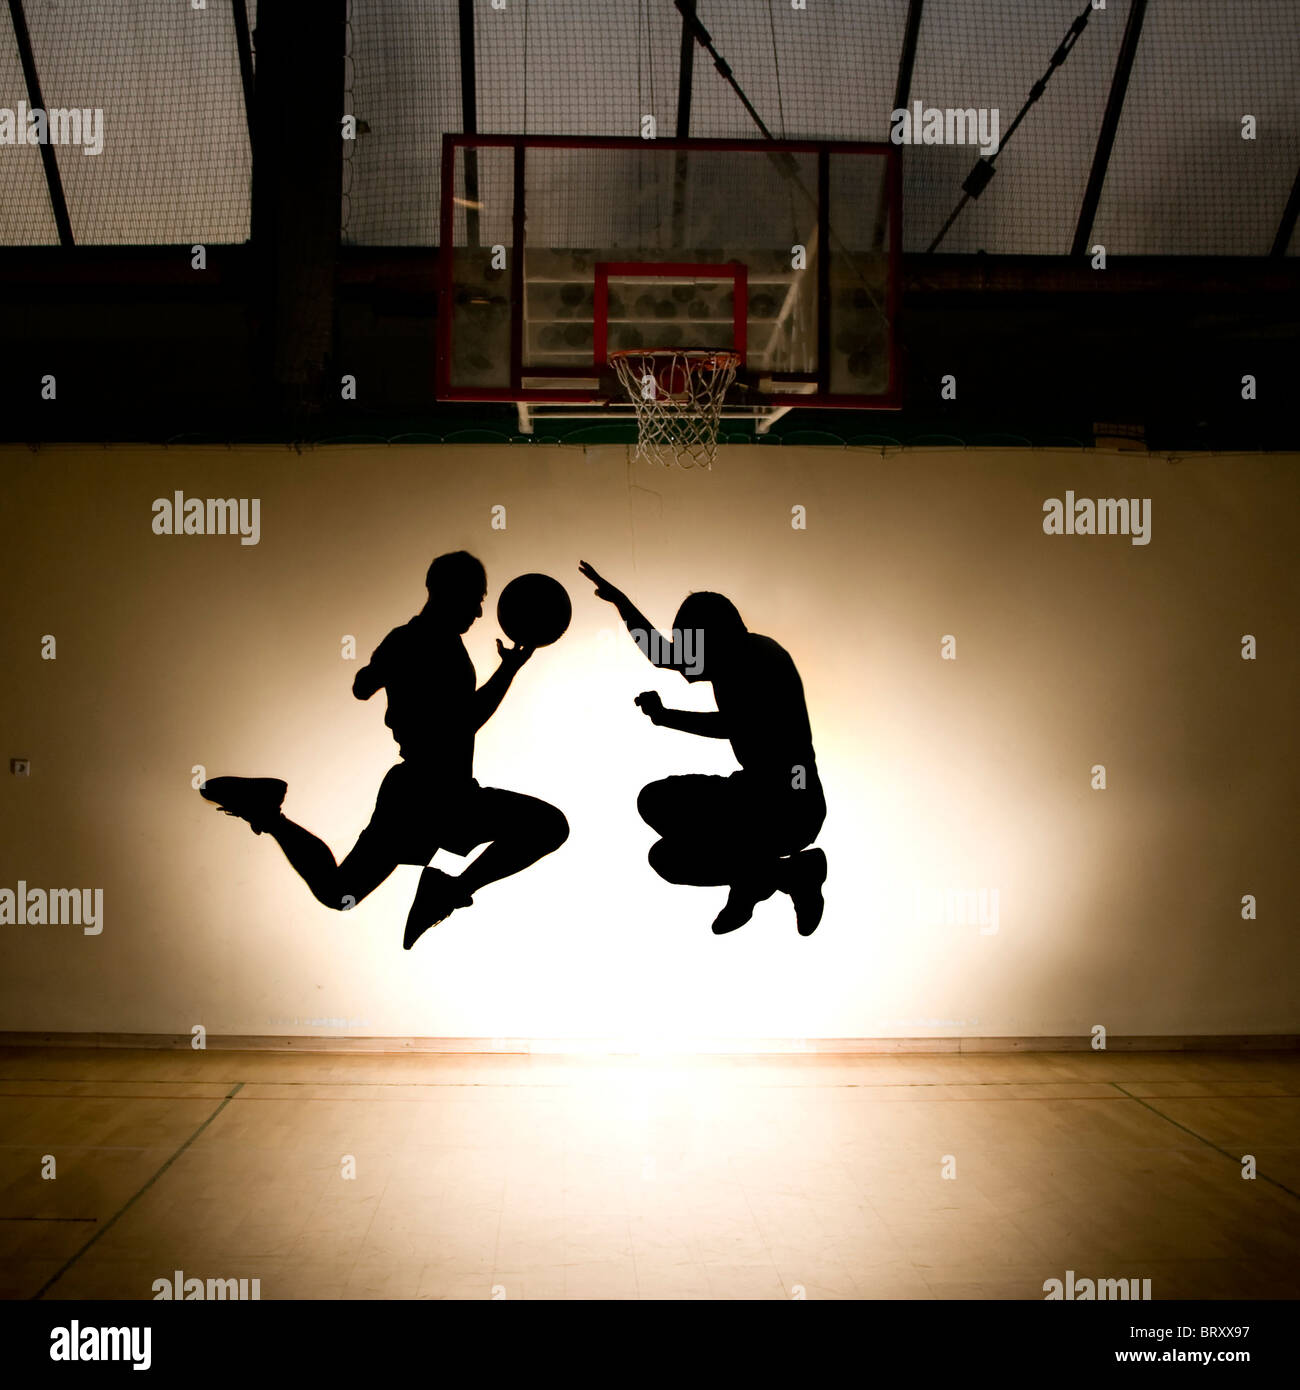 Basketball jump - black silhouette Stock Photo